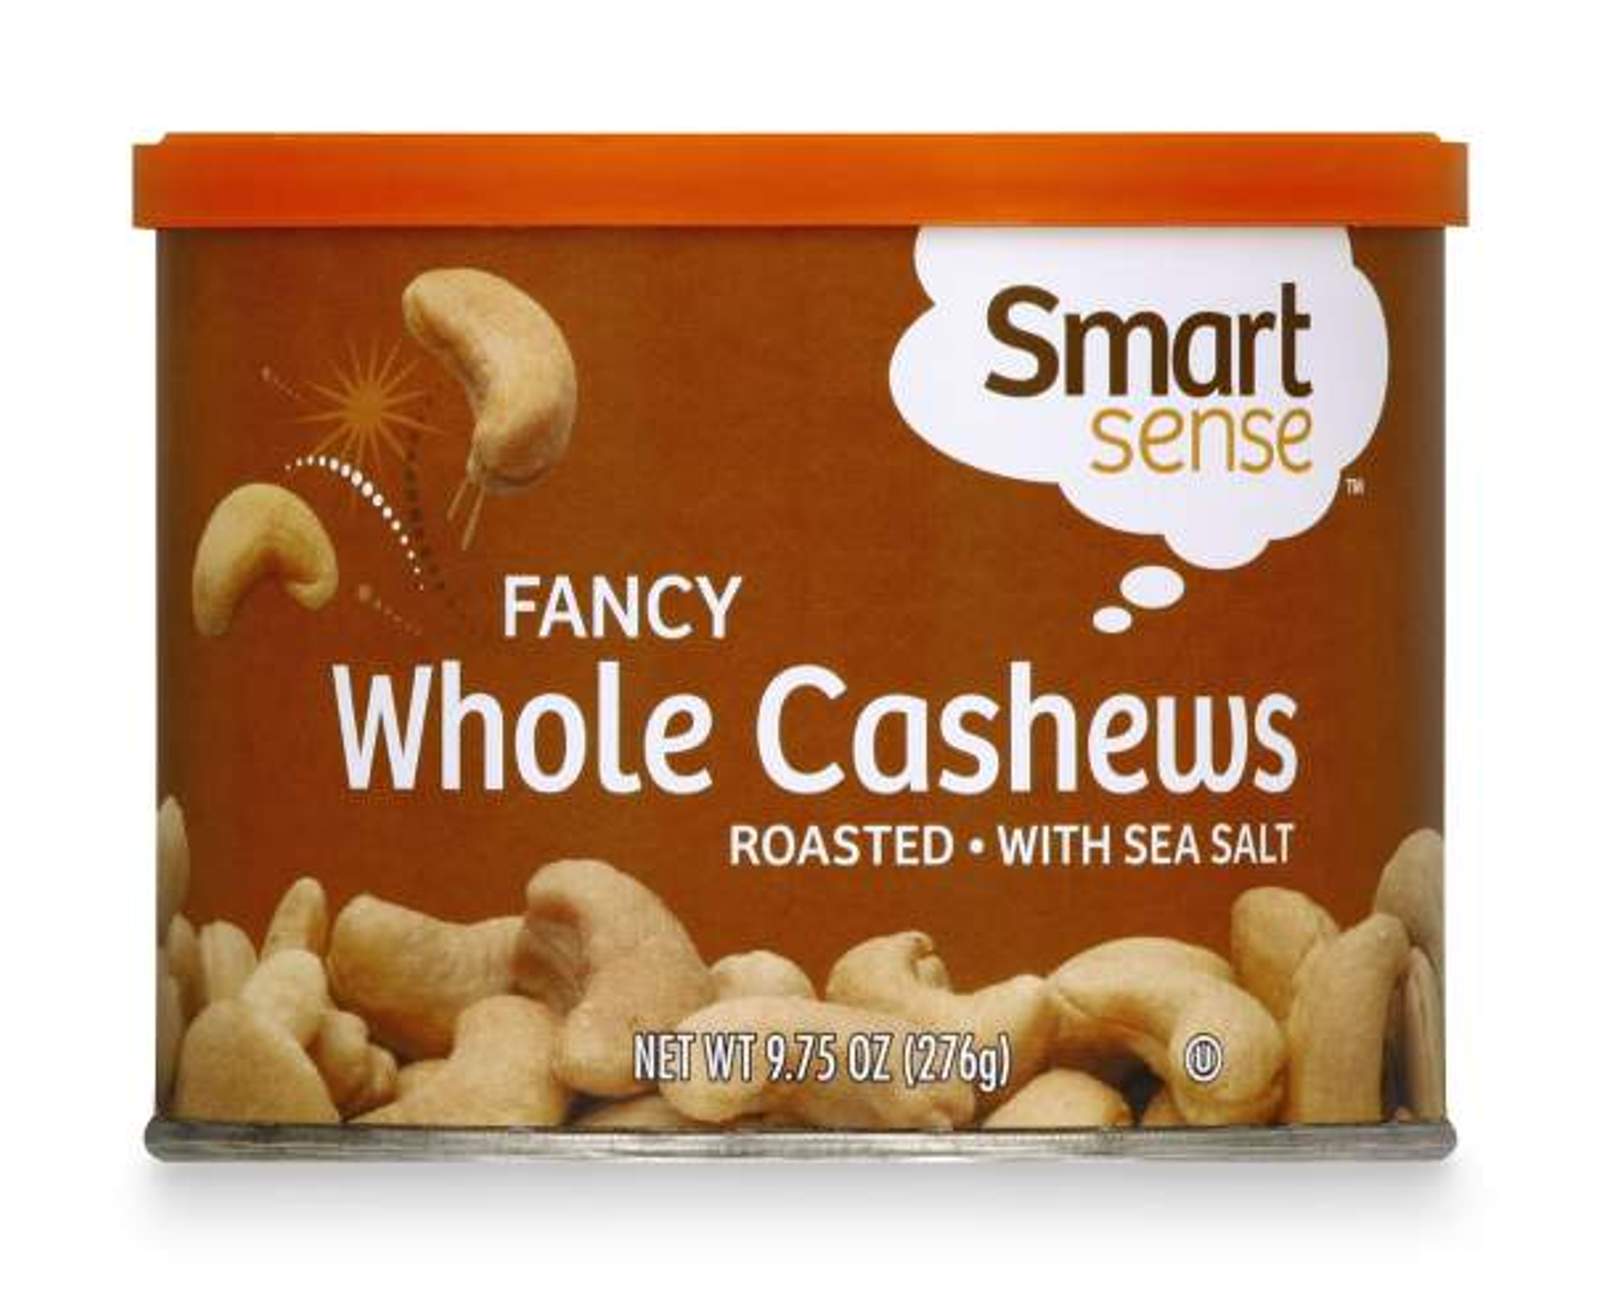 Smart Sense Cashews, Whole, Fancy, Roasted, With Sea Salt, 9.75 oz (276 g)